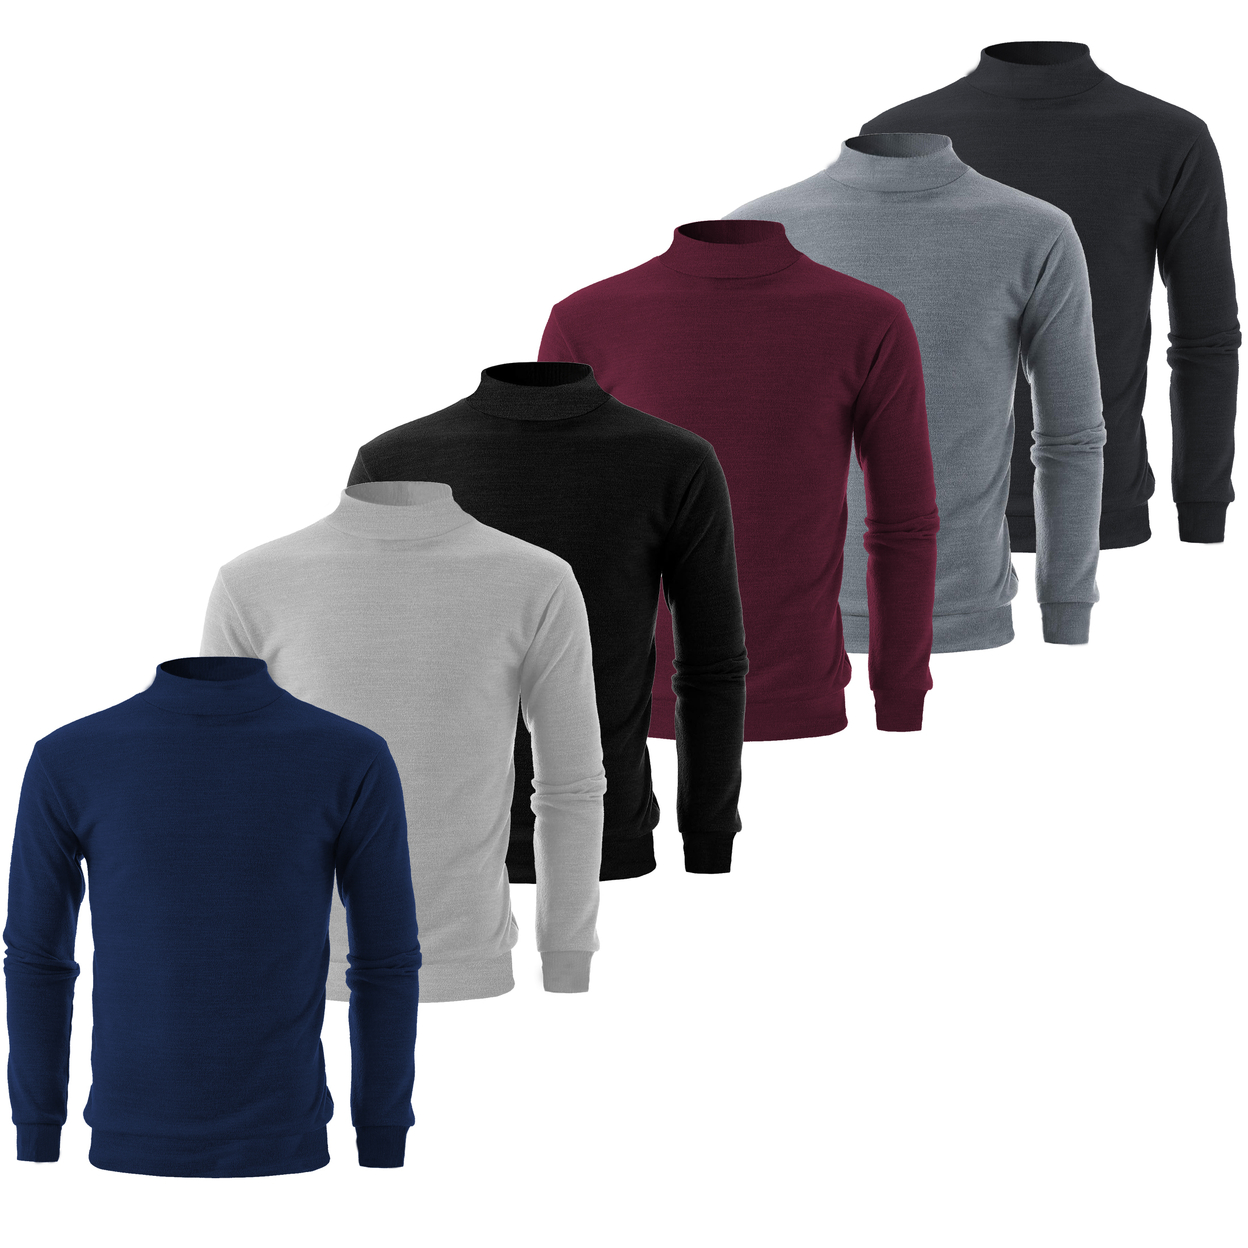 Men's Winter Warm Cozy Knit Slim-Fit Mock Neck Sweater - White, Medium